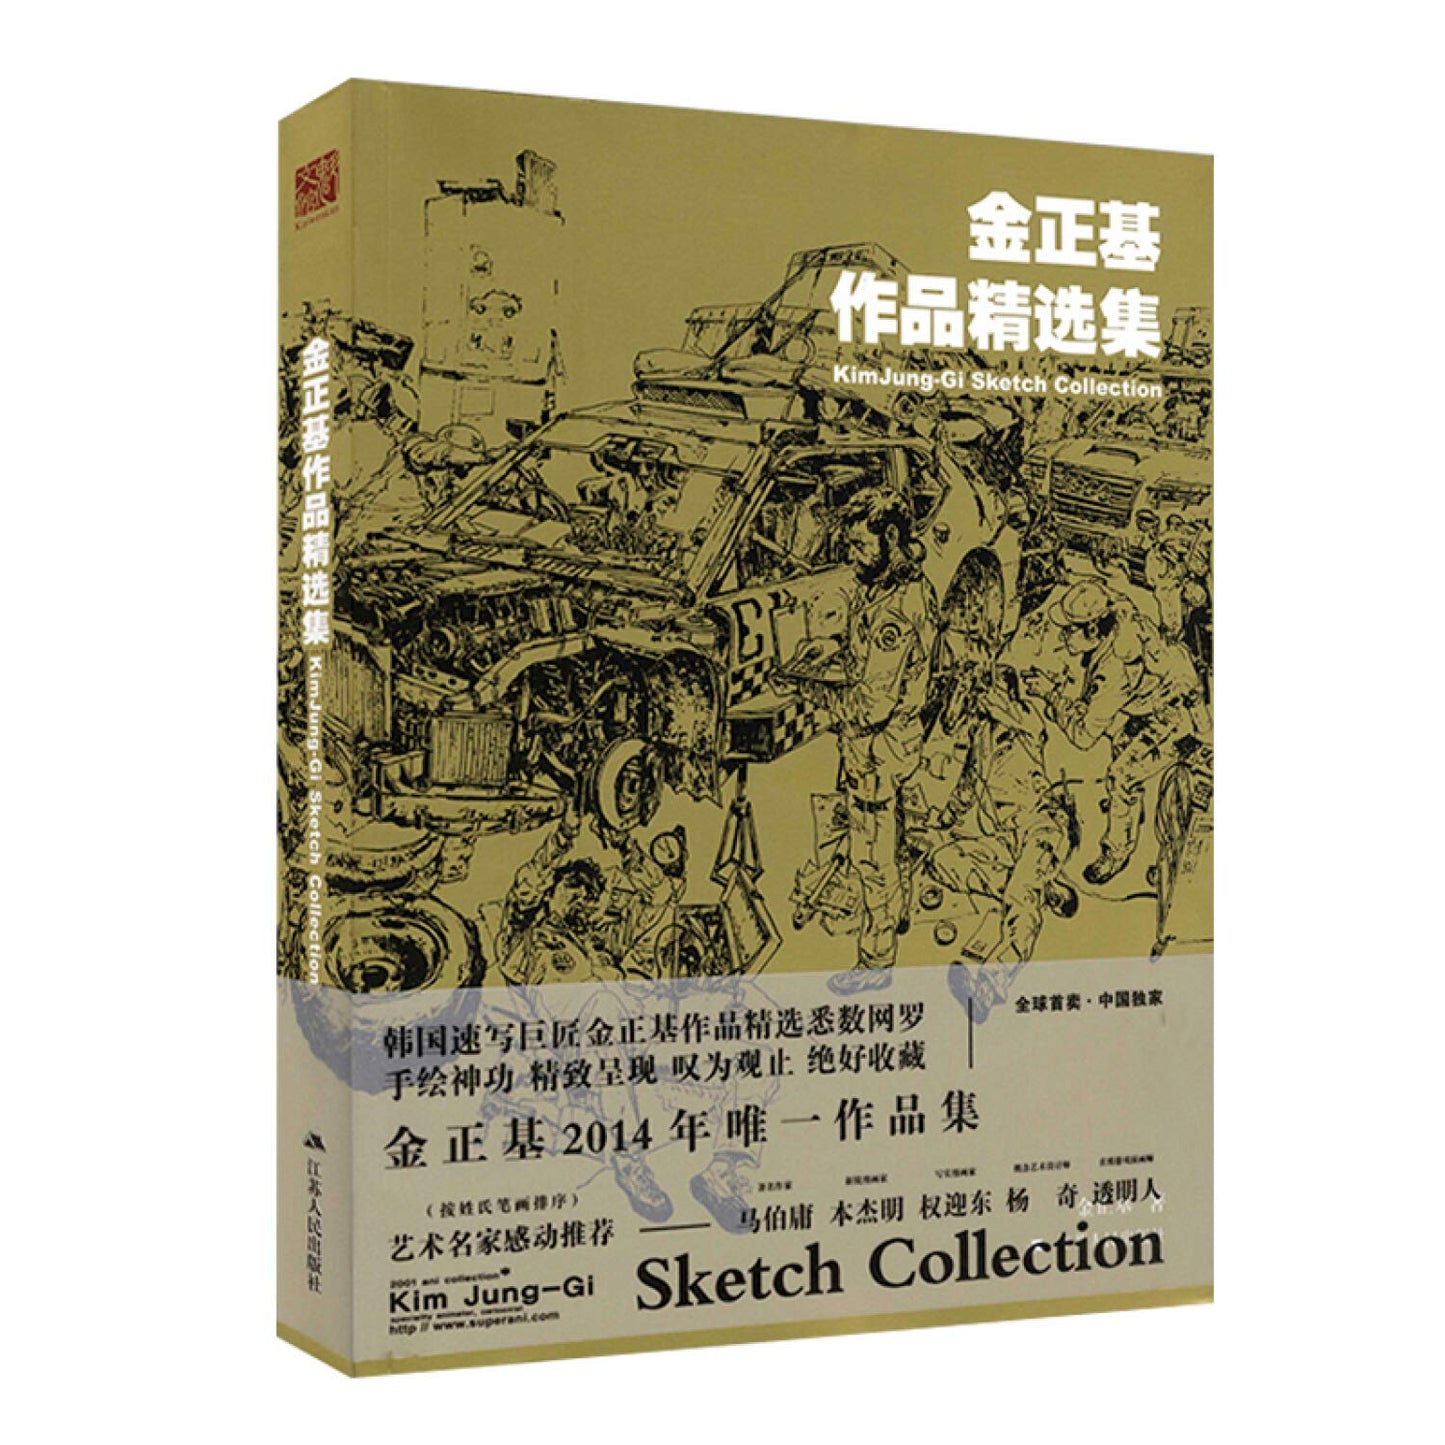 Kim Jung Gi Sketch Collection Book